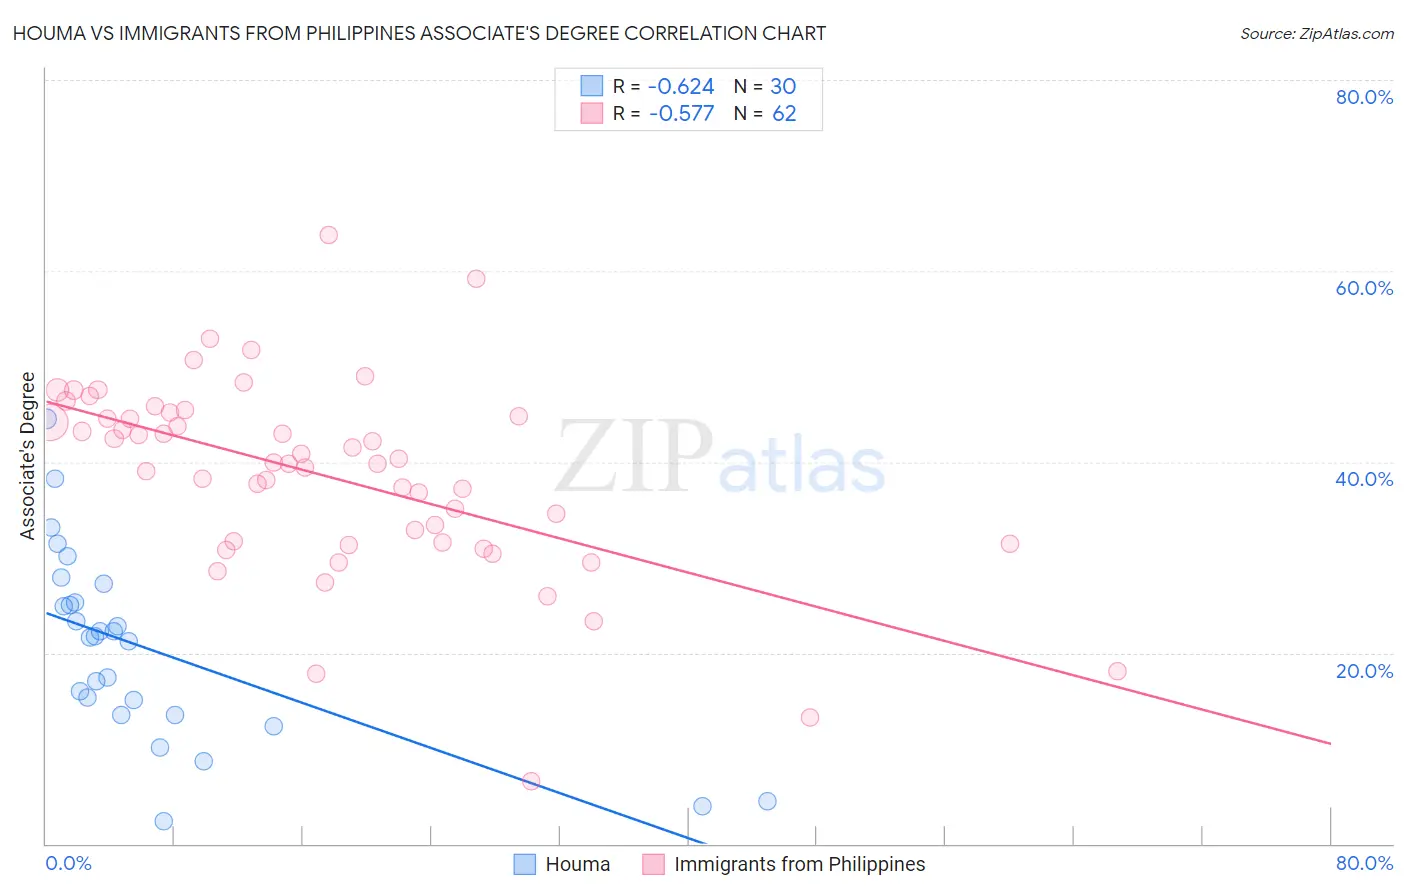 Houma vs Immigrants from Philippines Associate's Degree